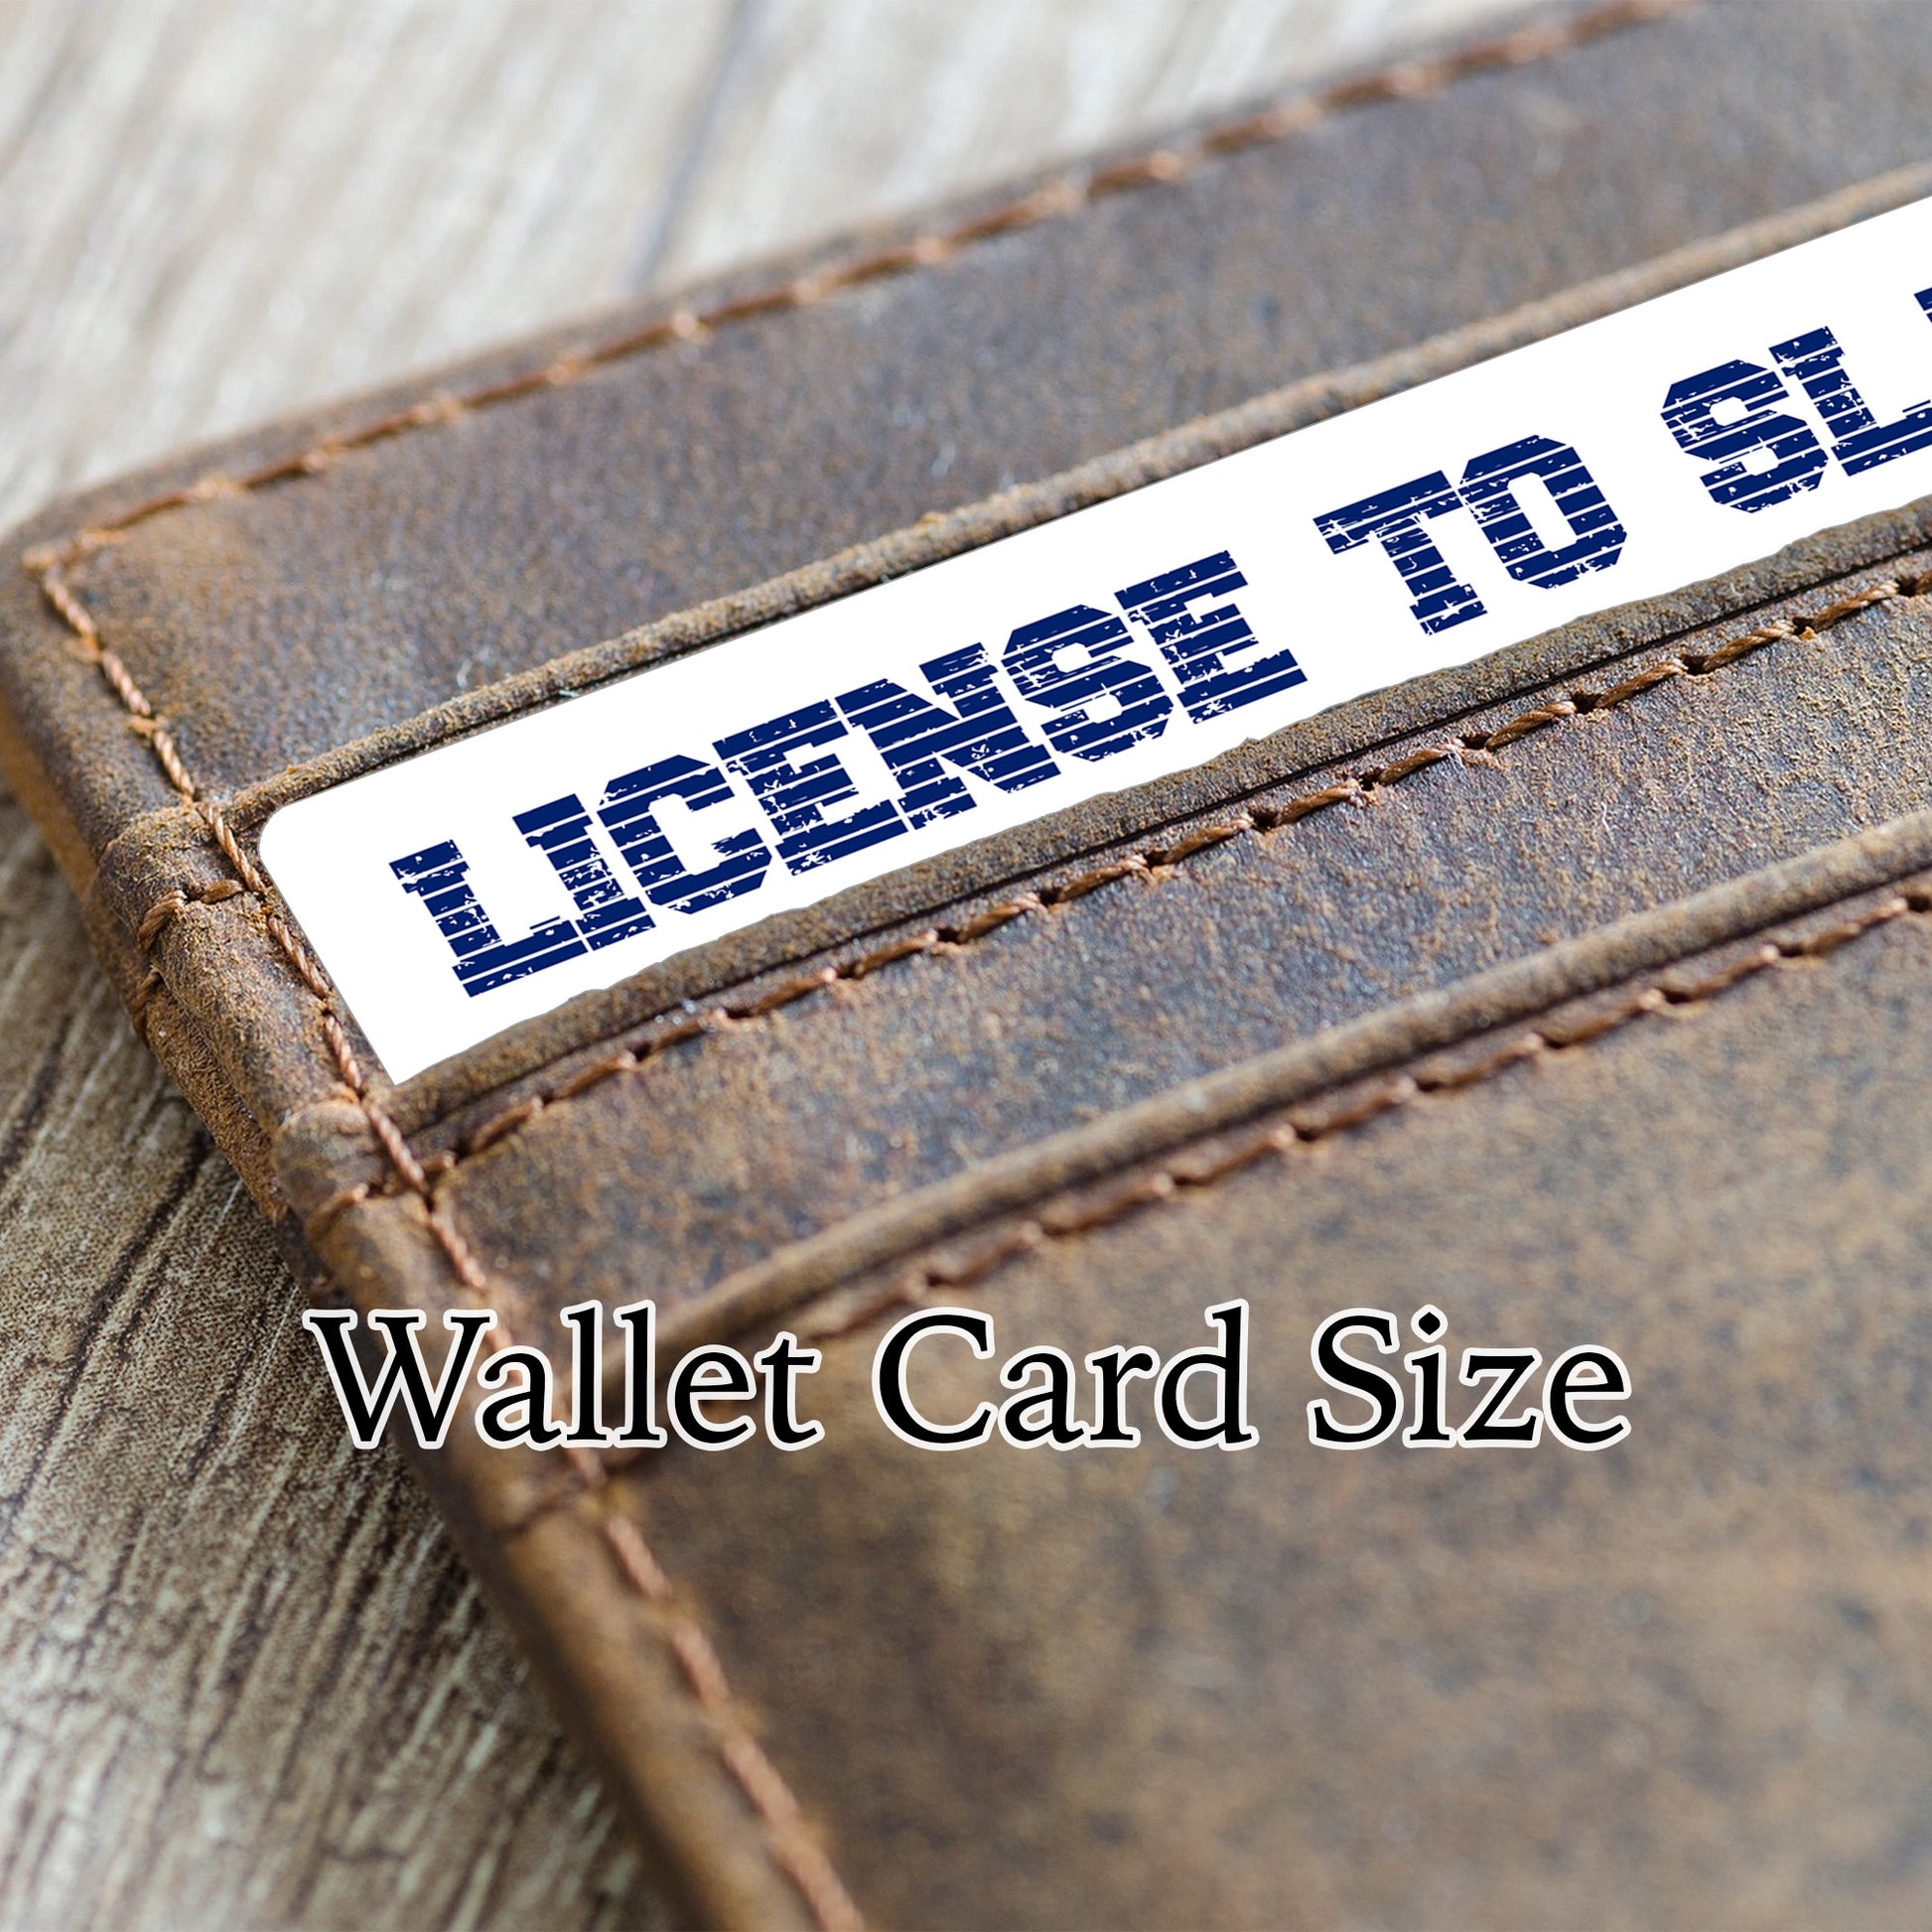 Polysexual pride personalised license to slay card